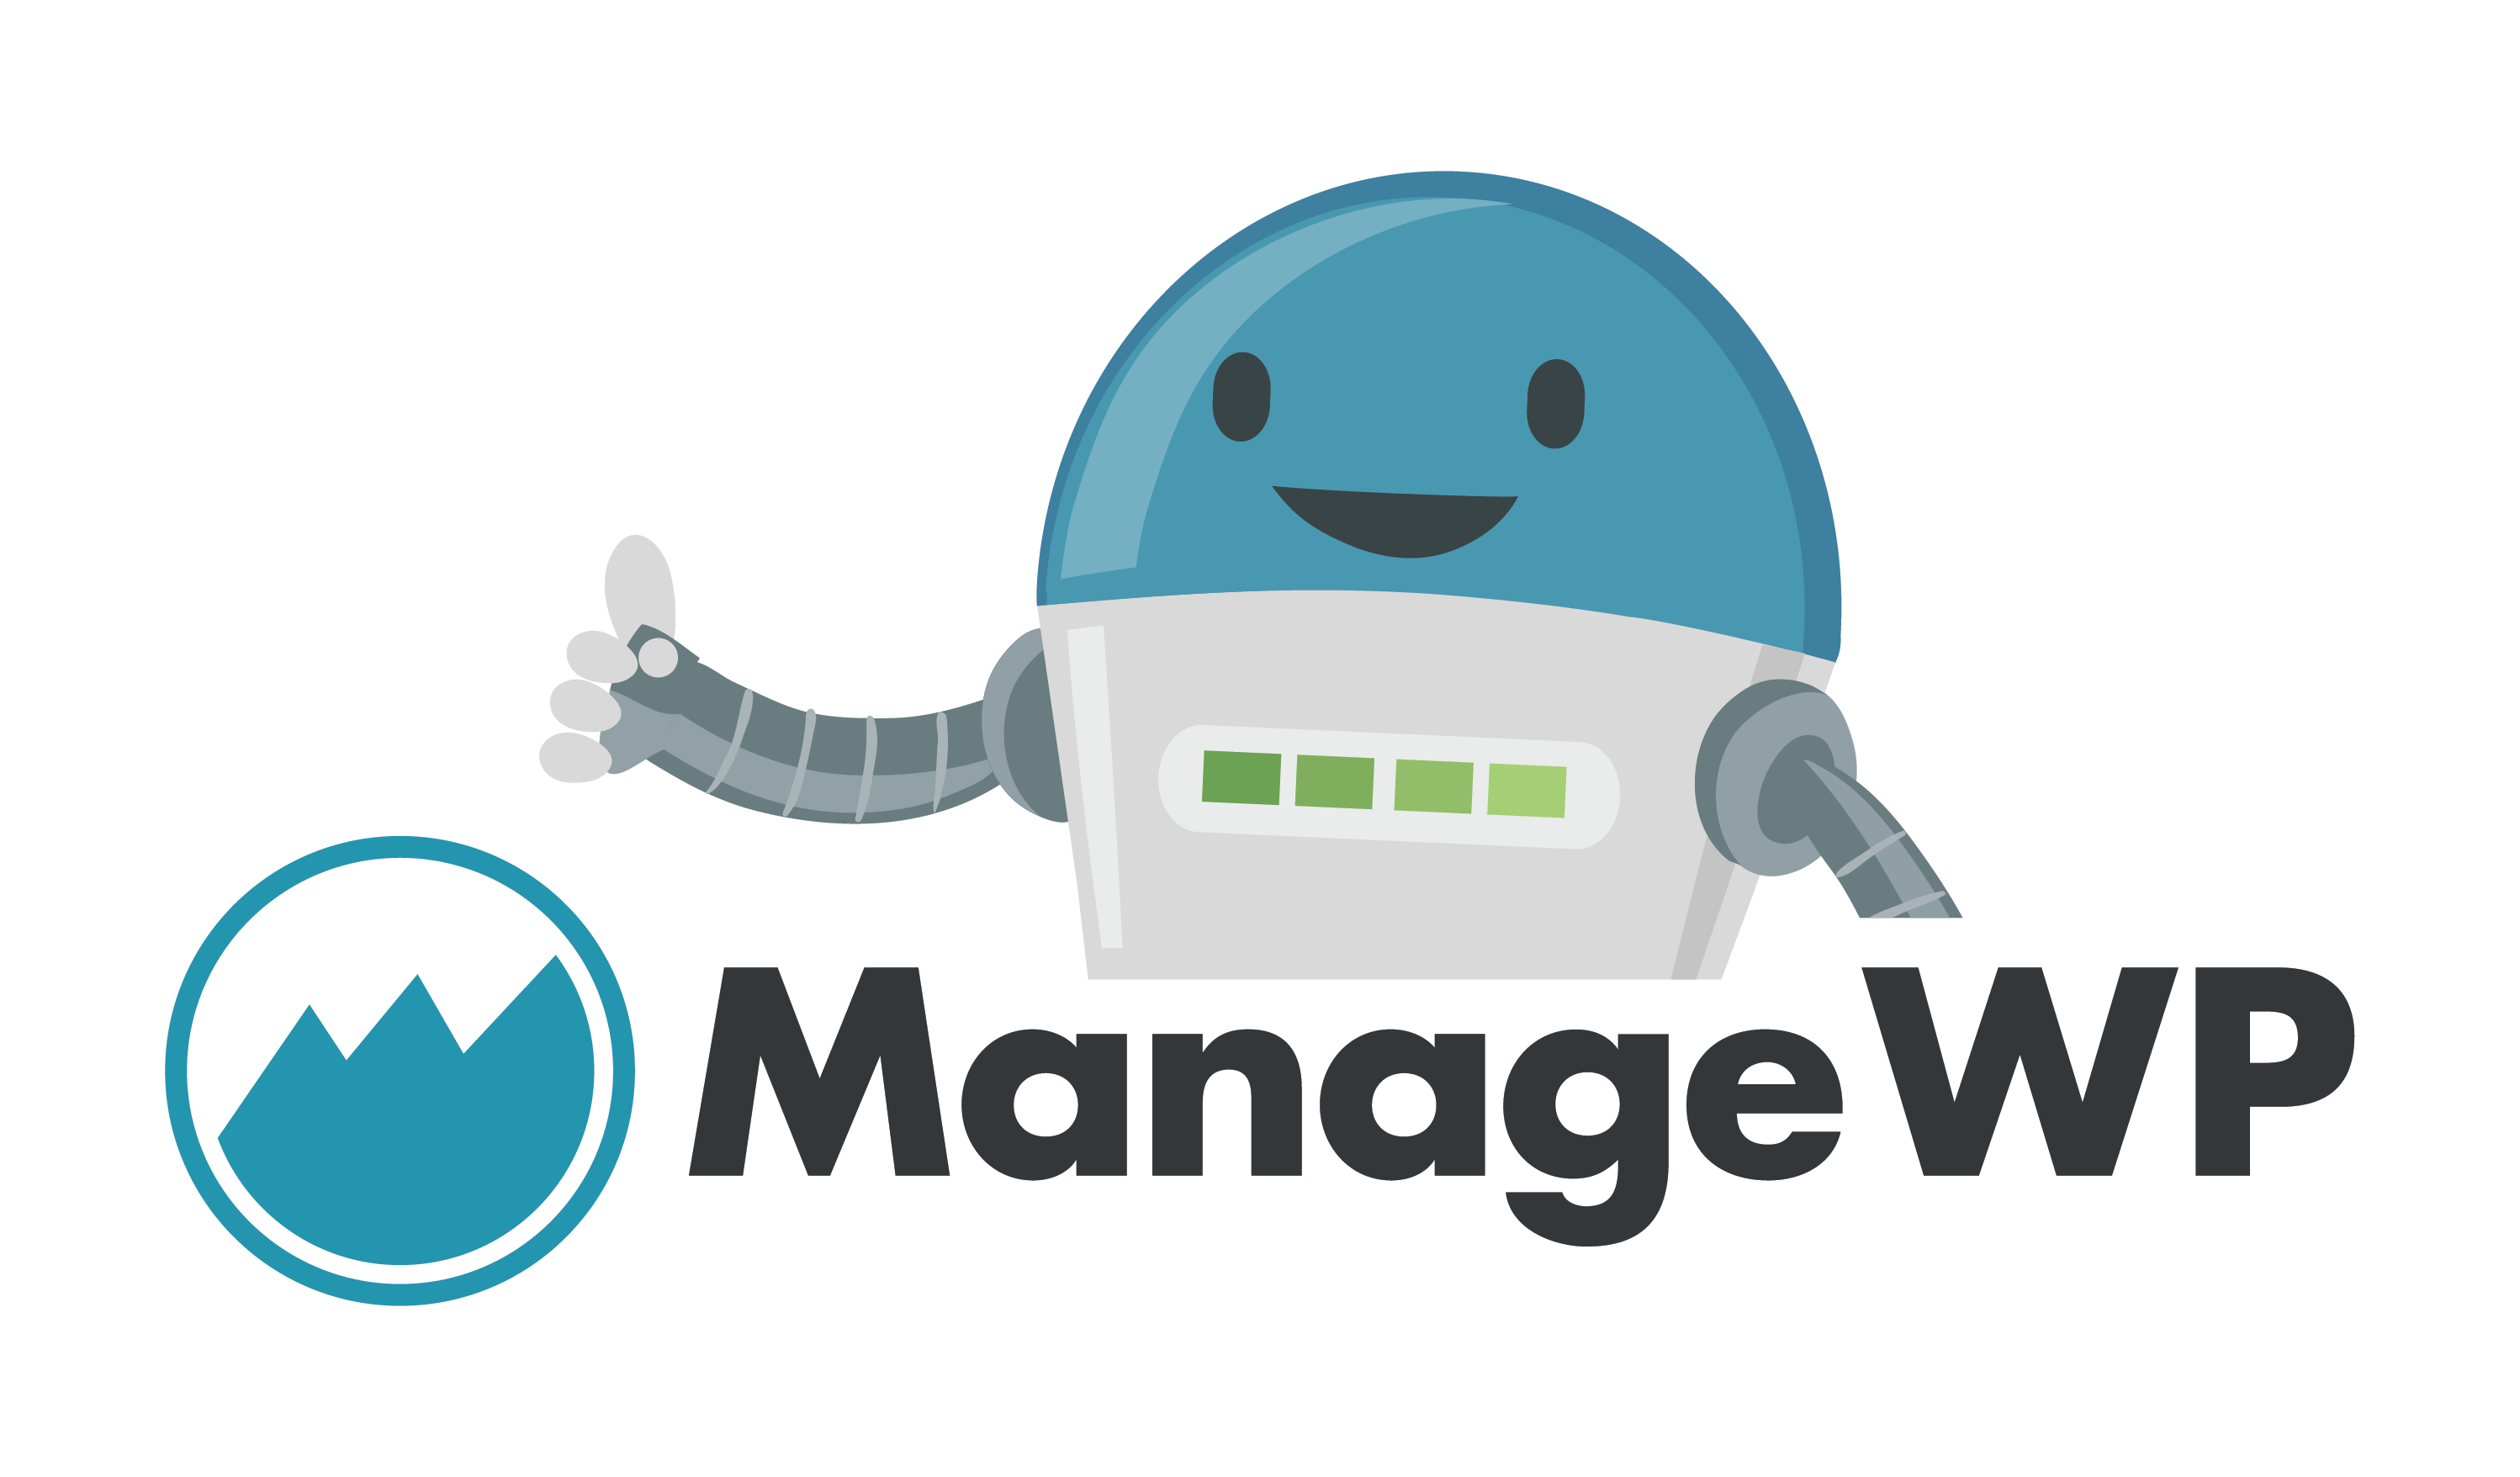 ManageWP-logo